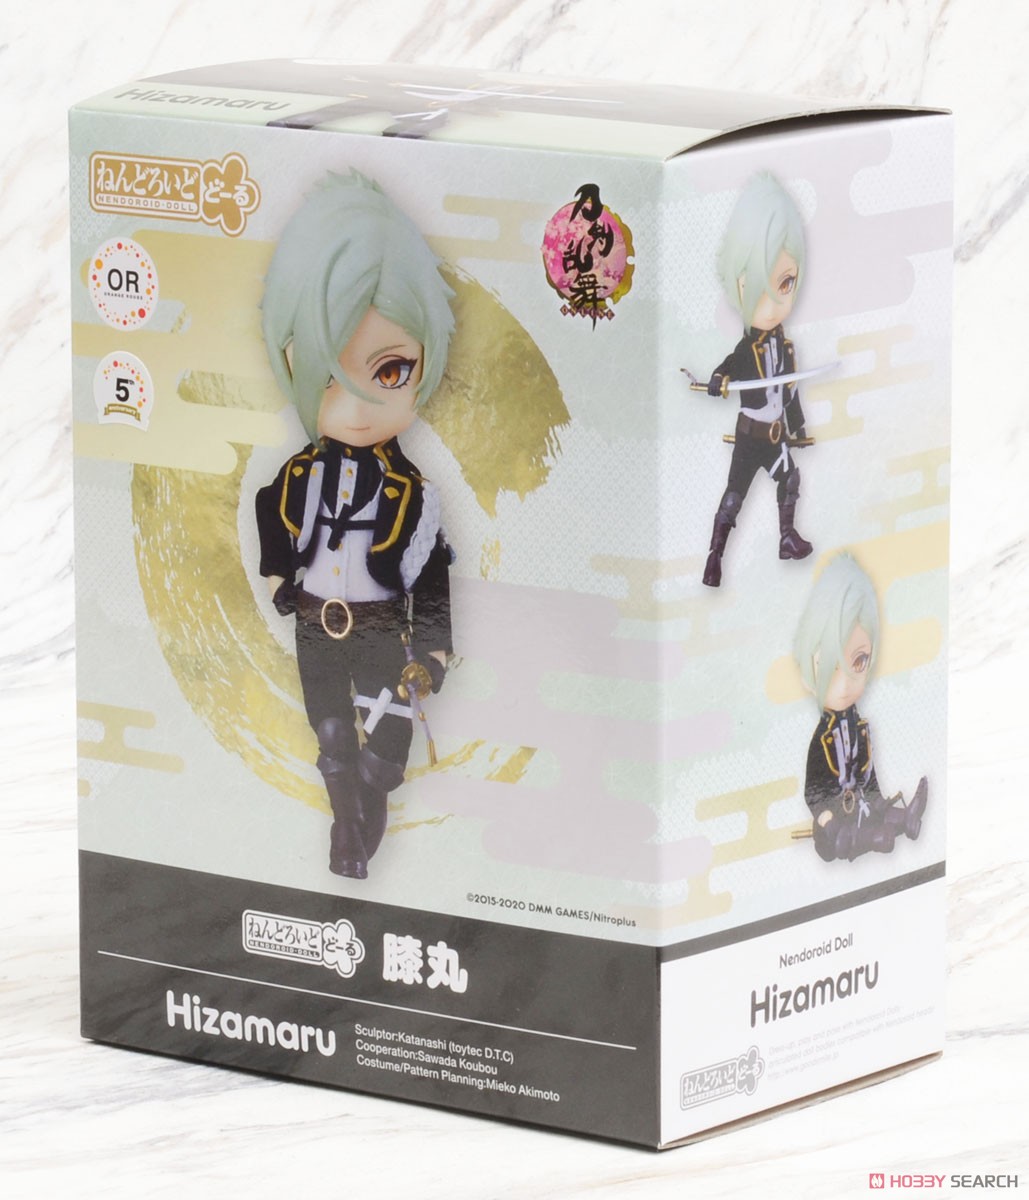 Nendoroid Doll Hizamaru (PVC Figure) Package1